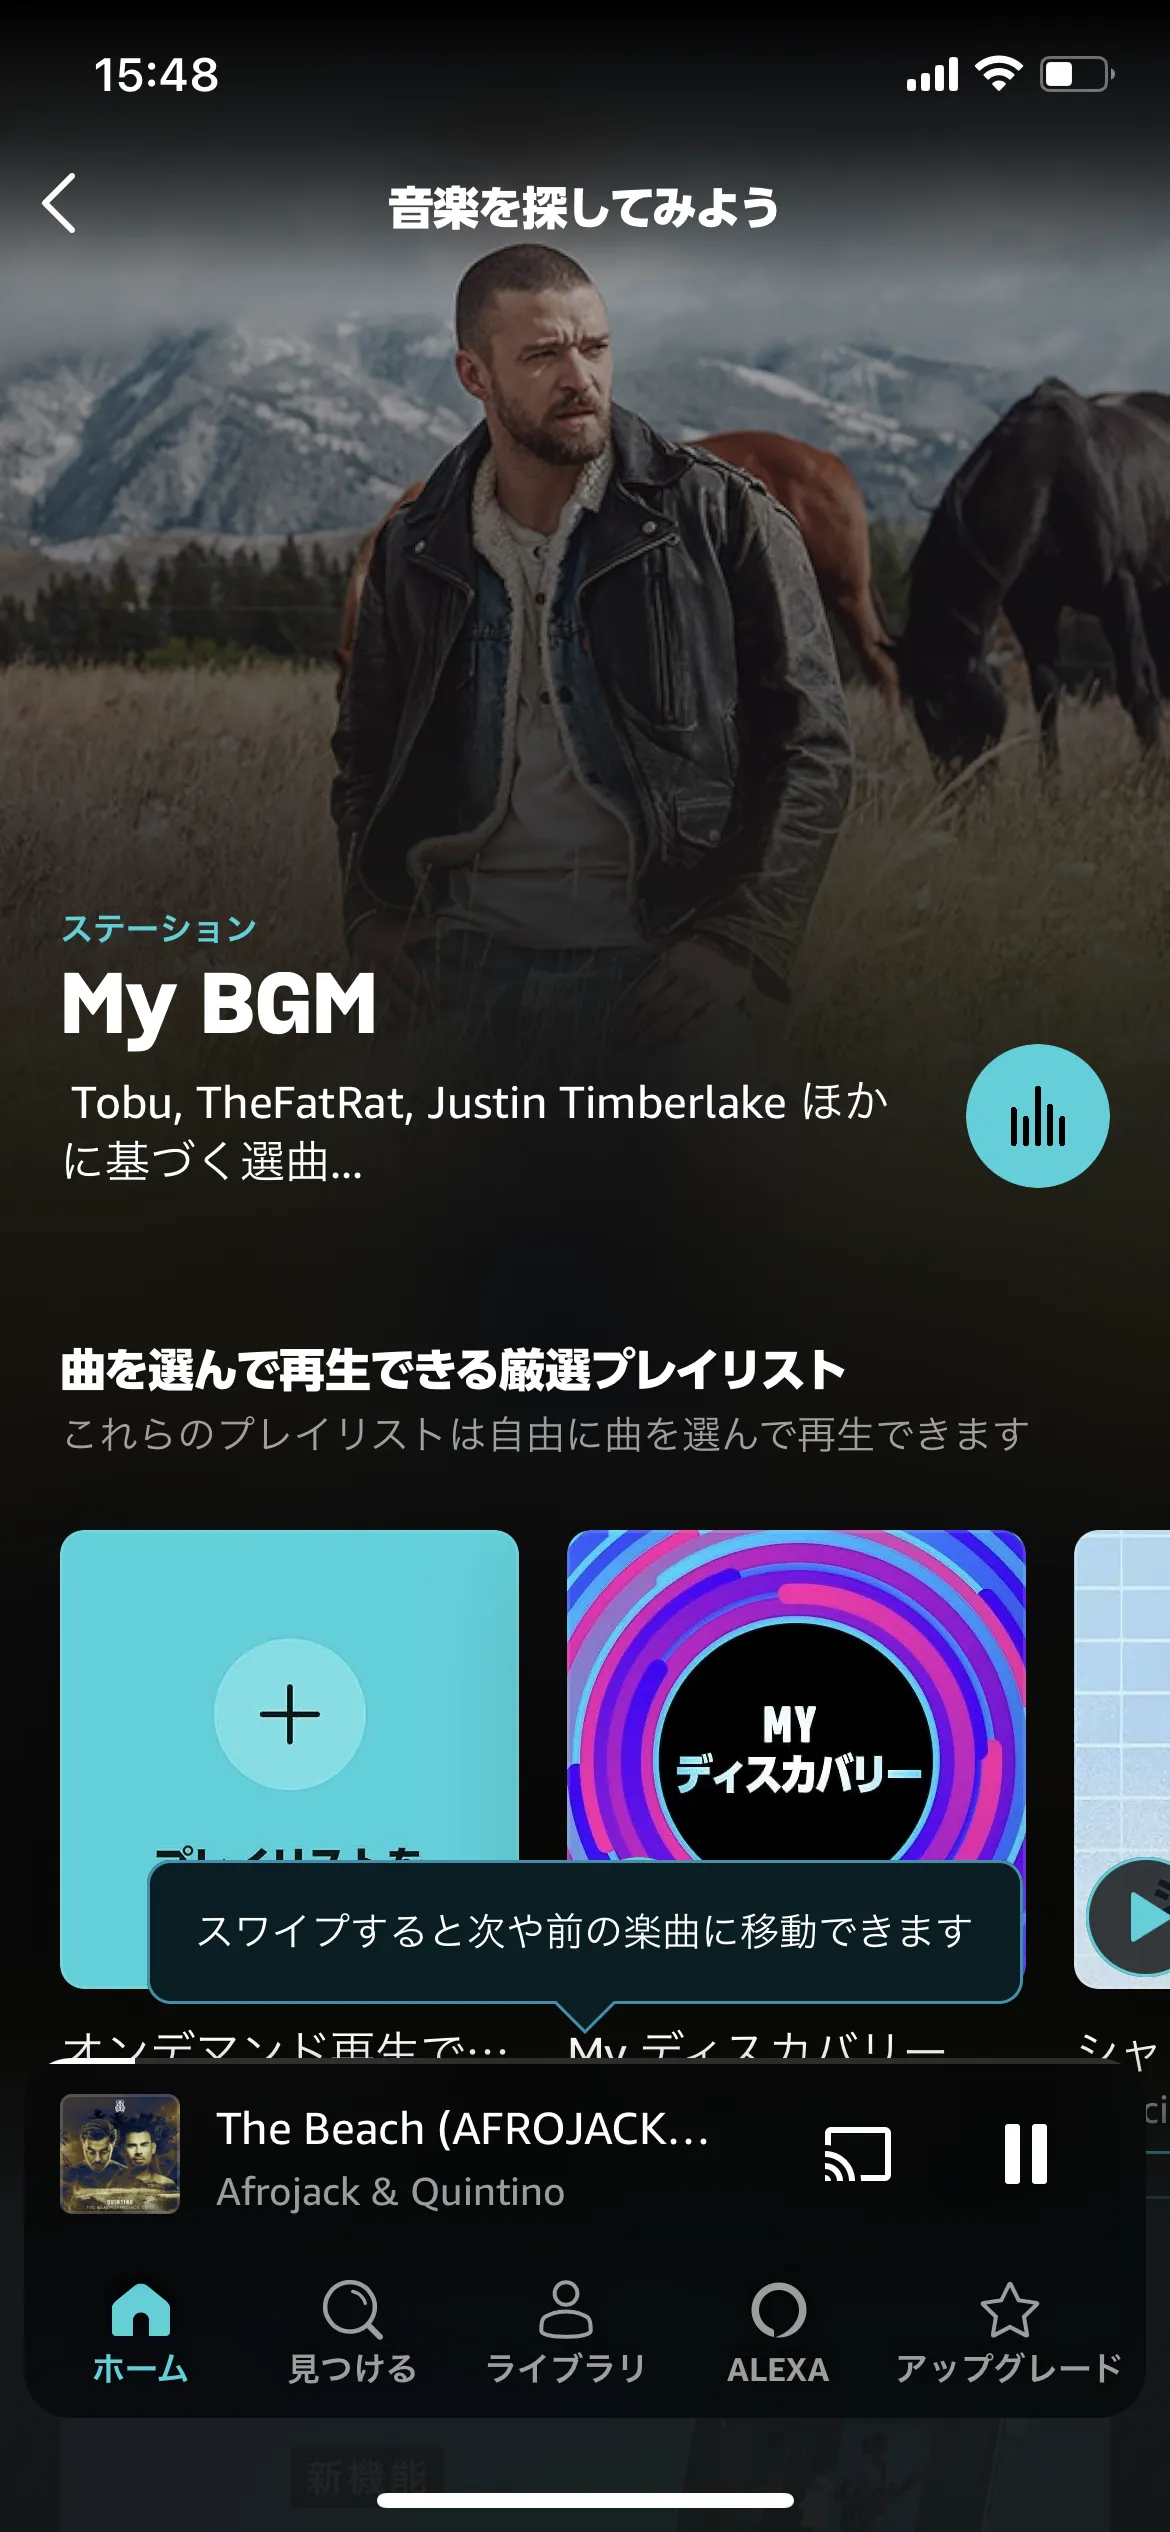 Amazon Music 音楽 screen